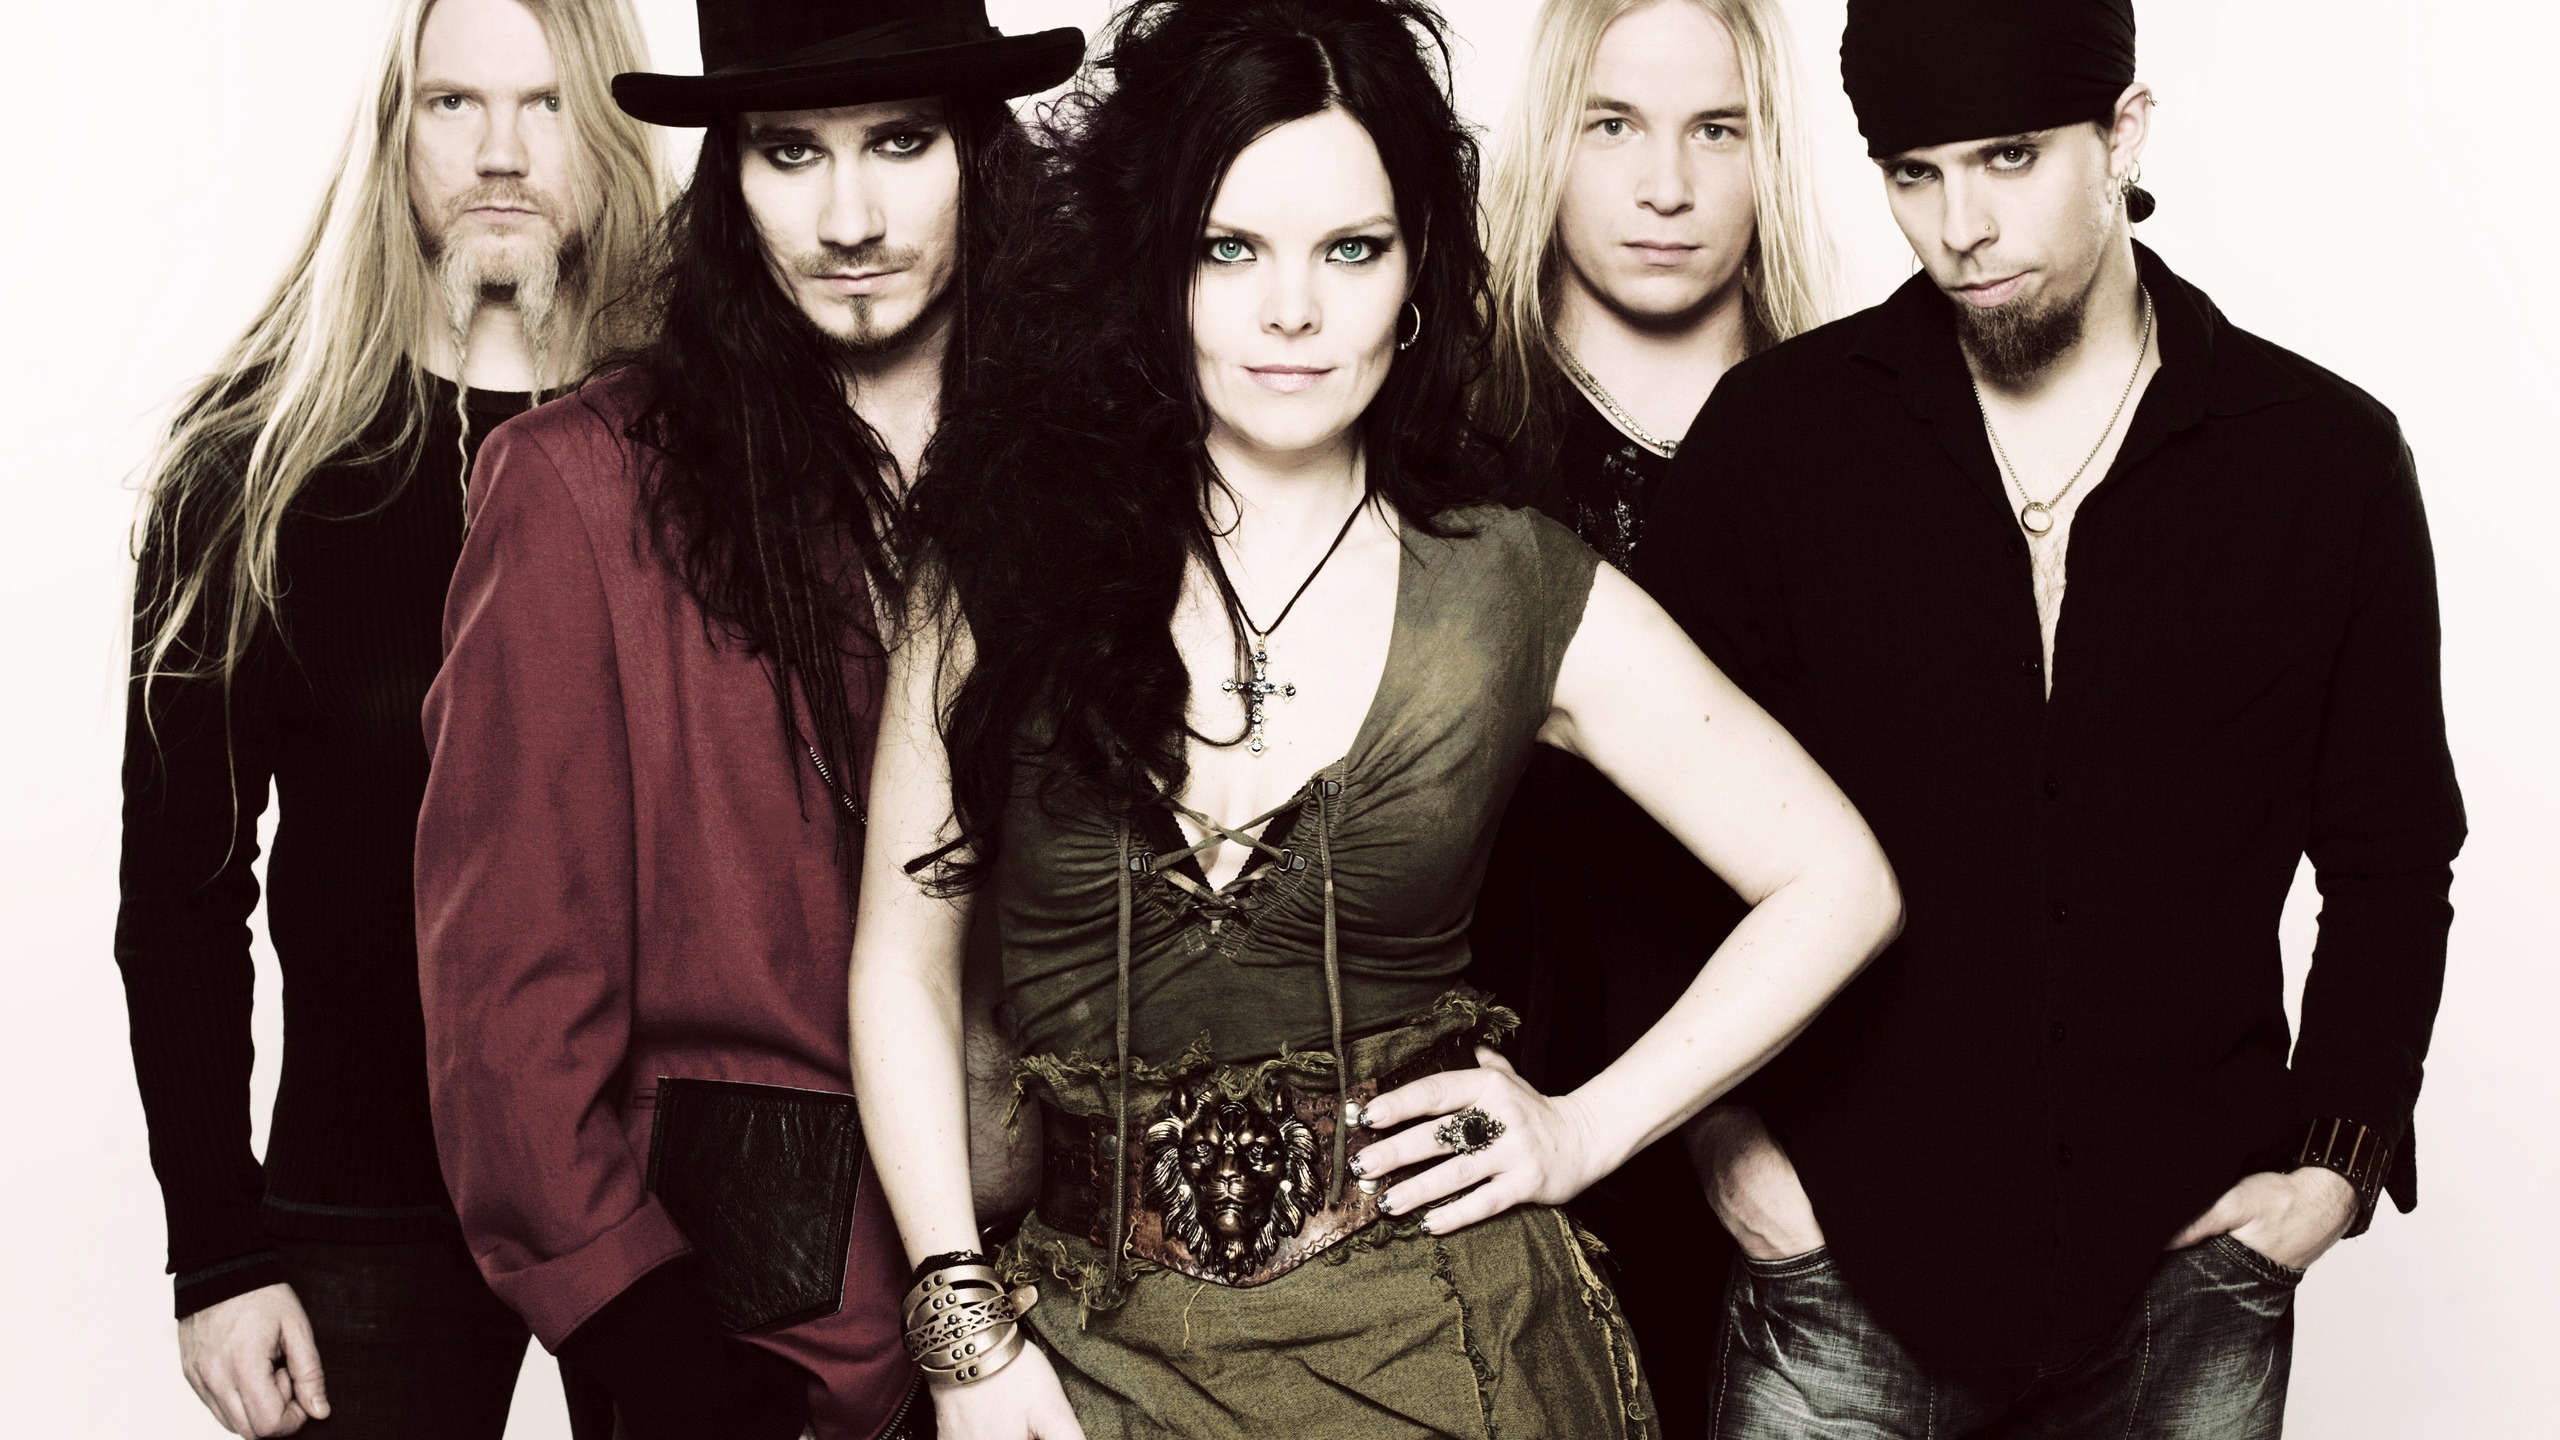 Nightwish Band for 2560x1440 HDTV resolution